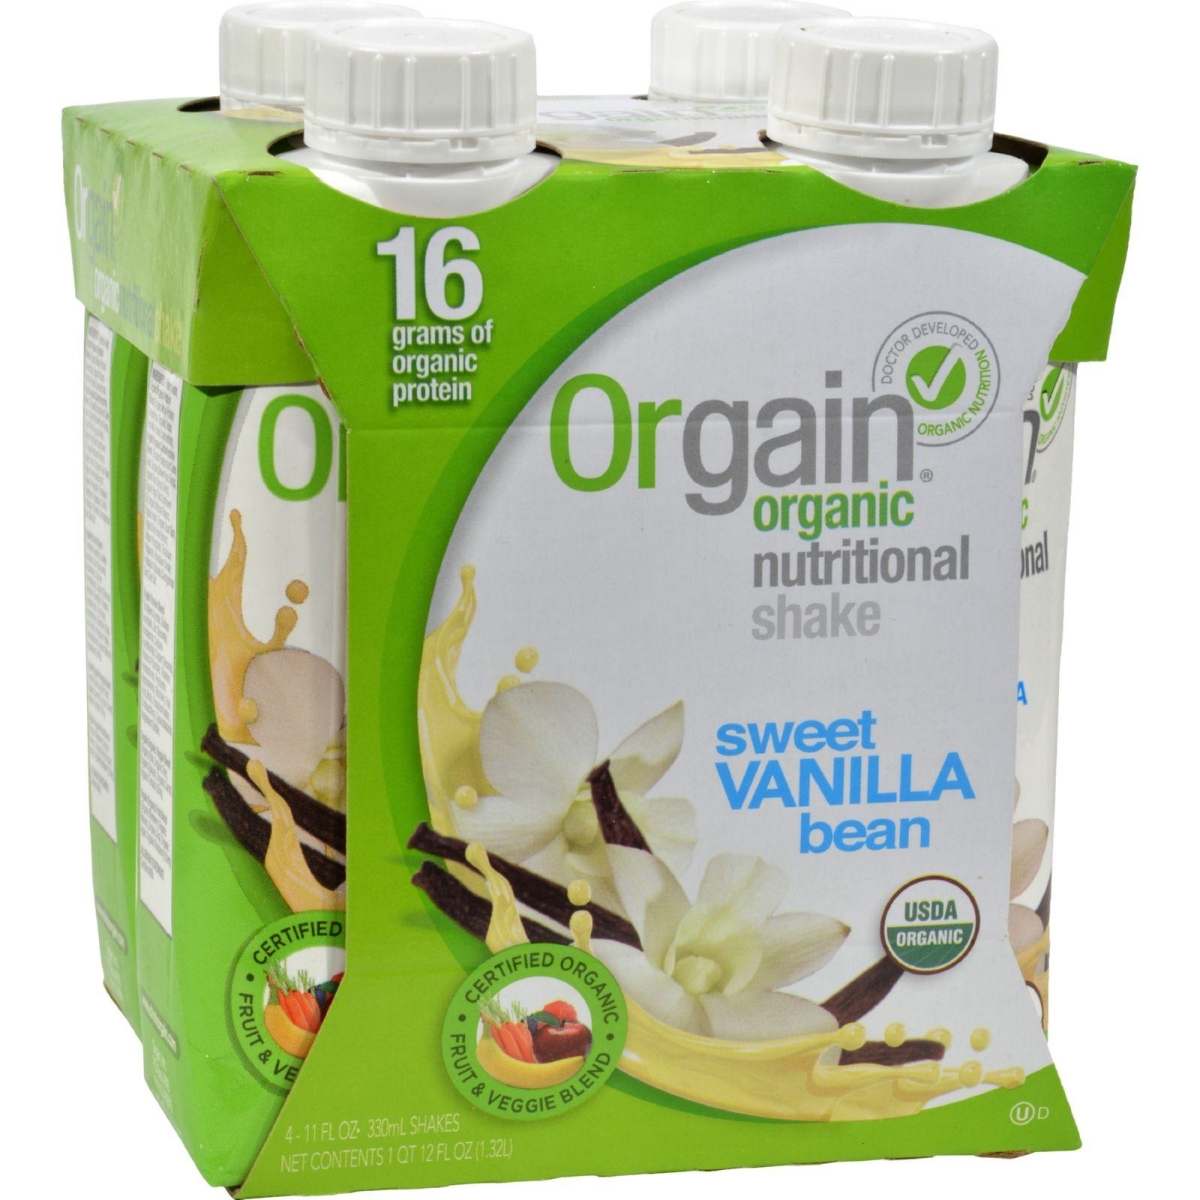 Hg1083401 11 Fl Oz Organic Nutrition Shake - Vanilla Bean, Case Of 12